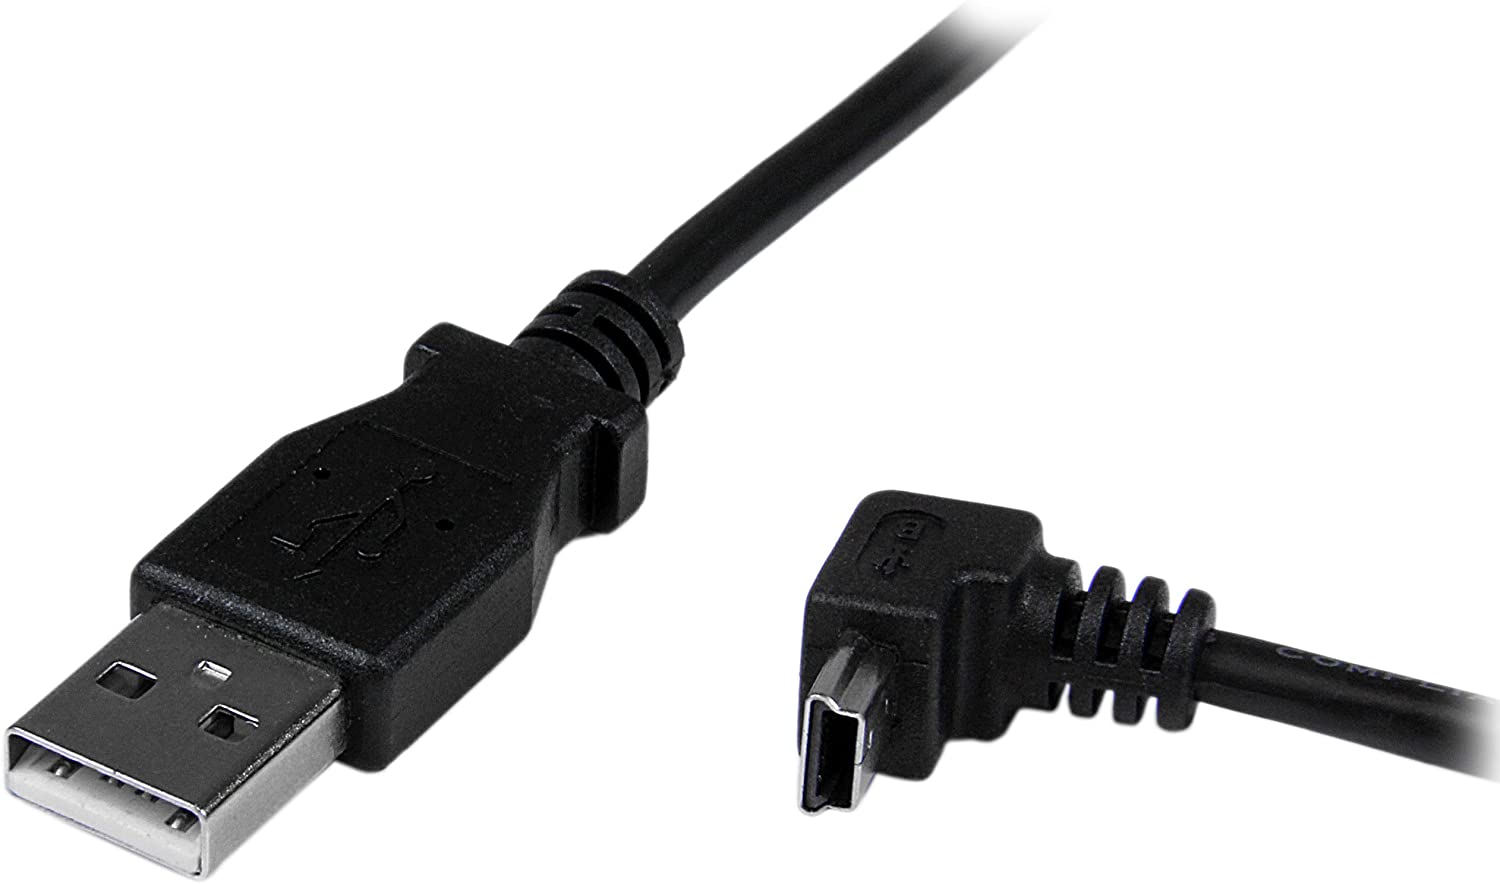 StarTech.com Down Angle Mini USB Cable - 2m - Black - USB A to Mini USB B - USB to Mini USB Cable. - e4cents